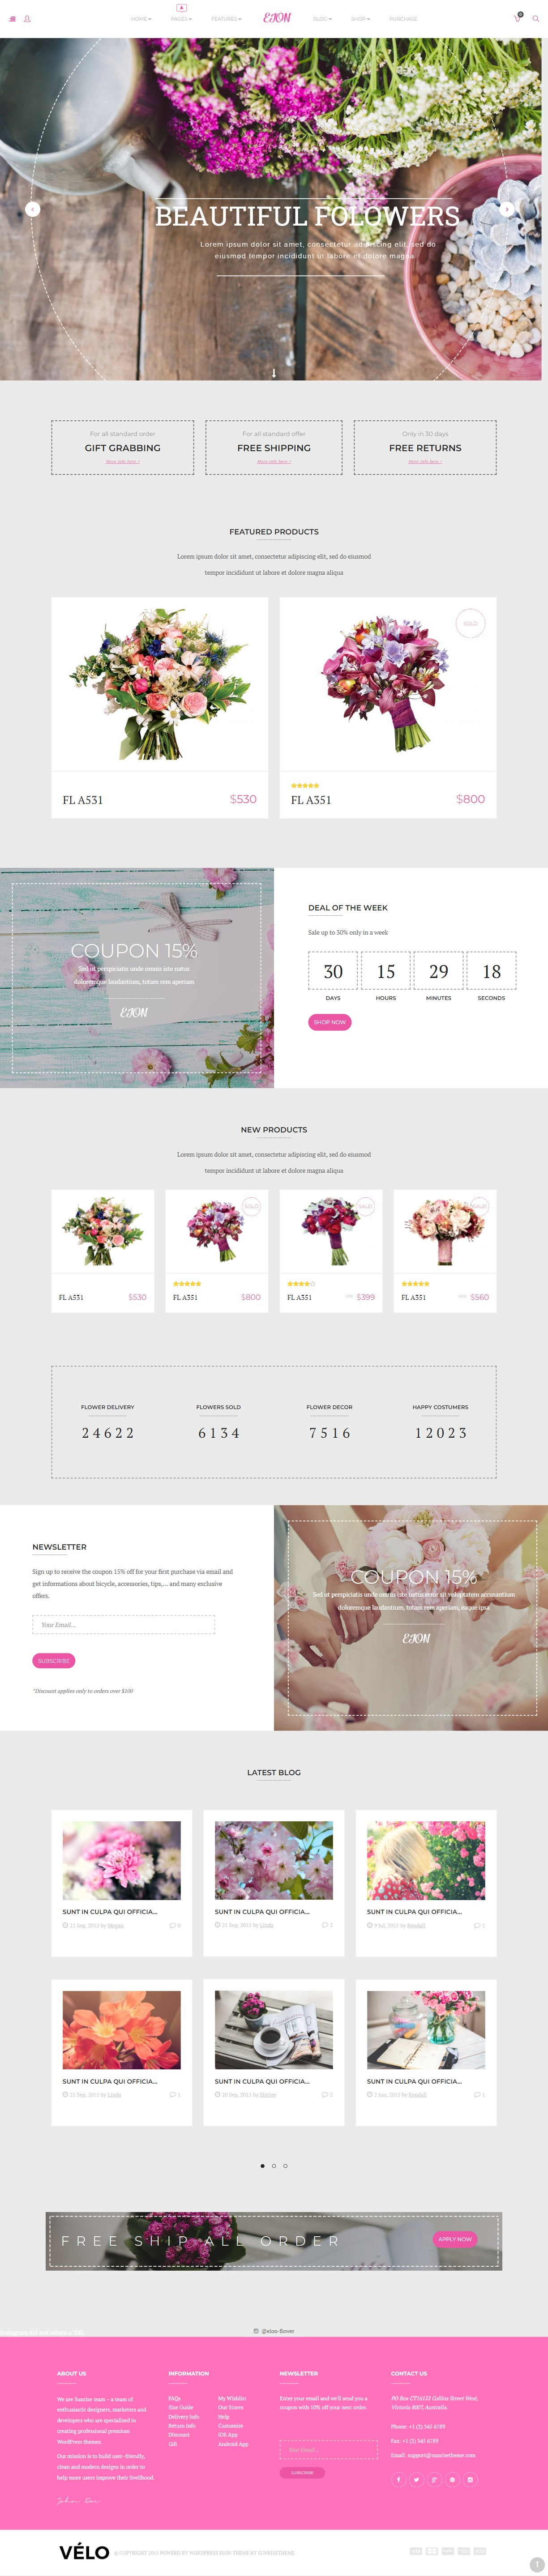 mẫu giao diện website cửa hàng hoa eion